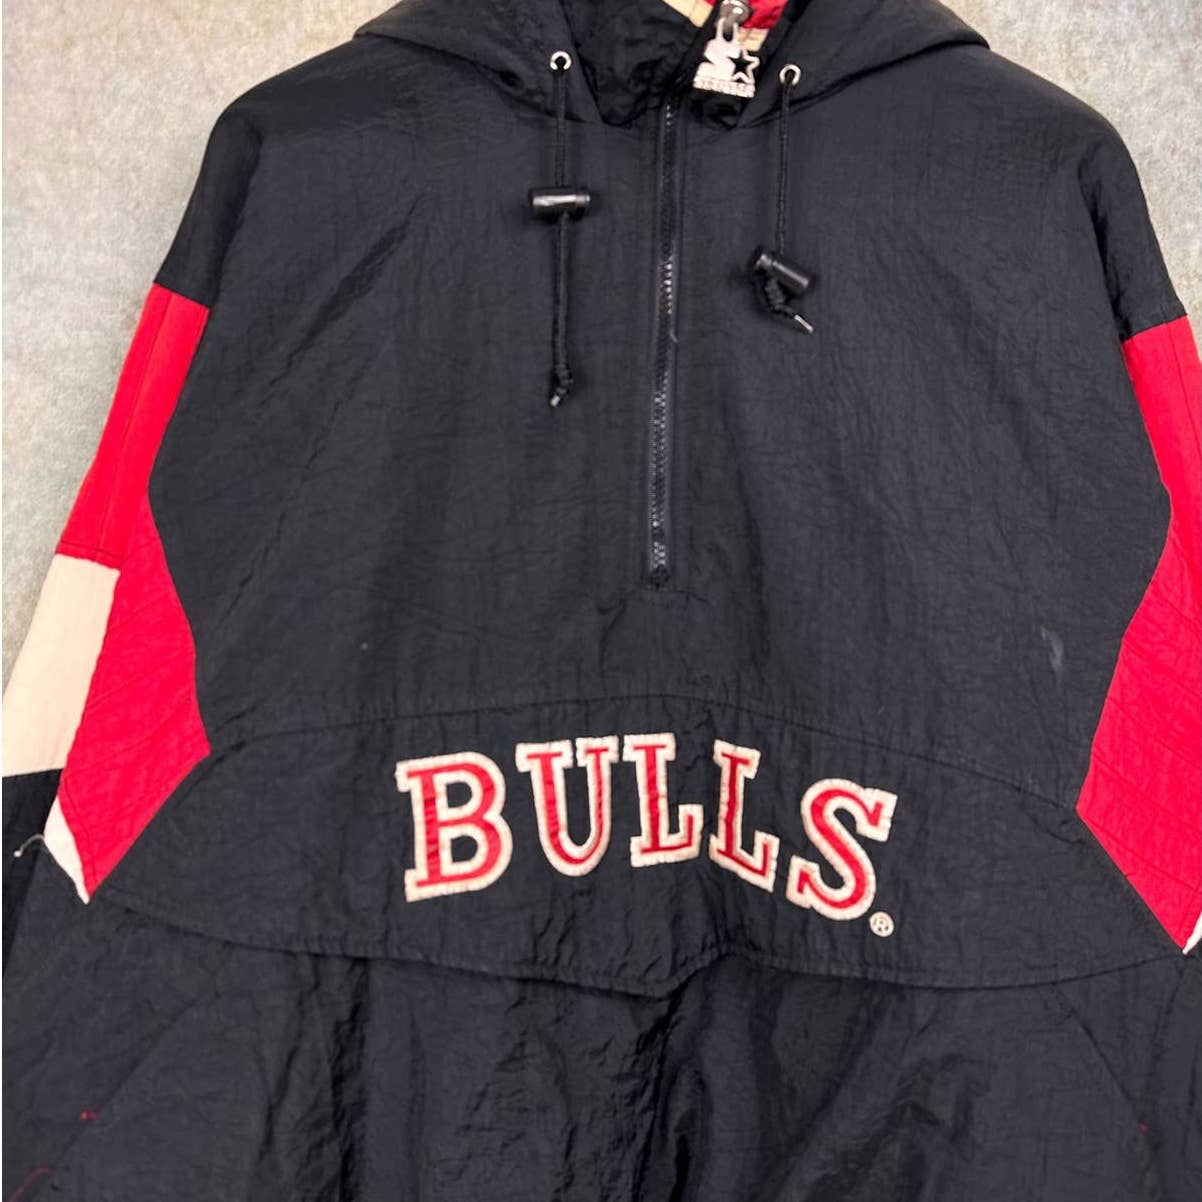 Vintage Chicago Bulls Starter Puffer Jacket XL